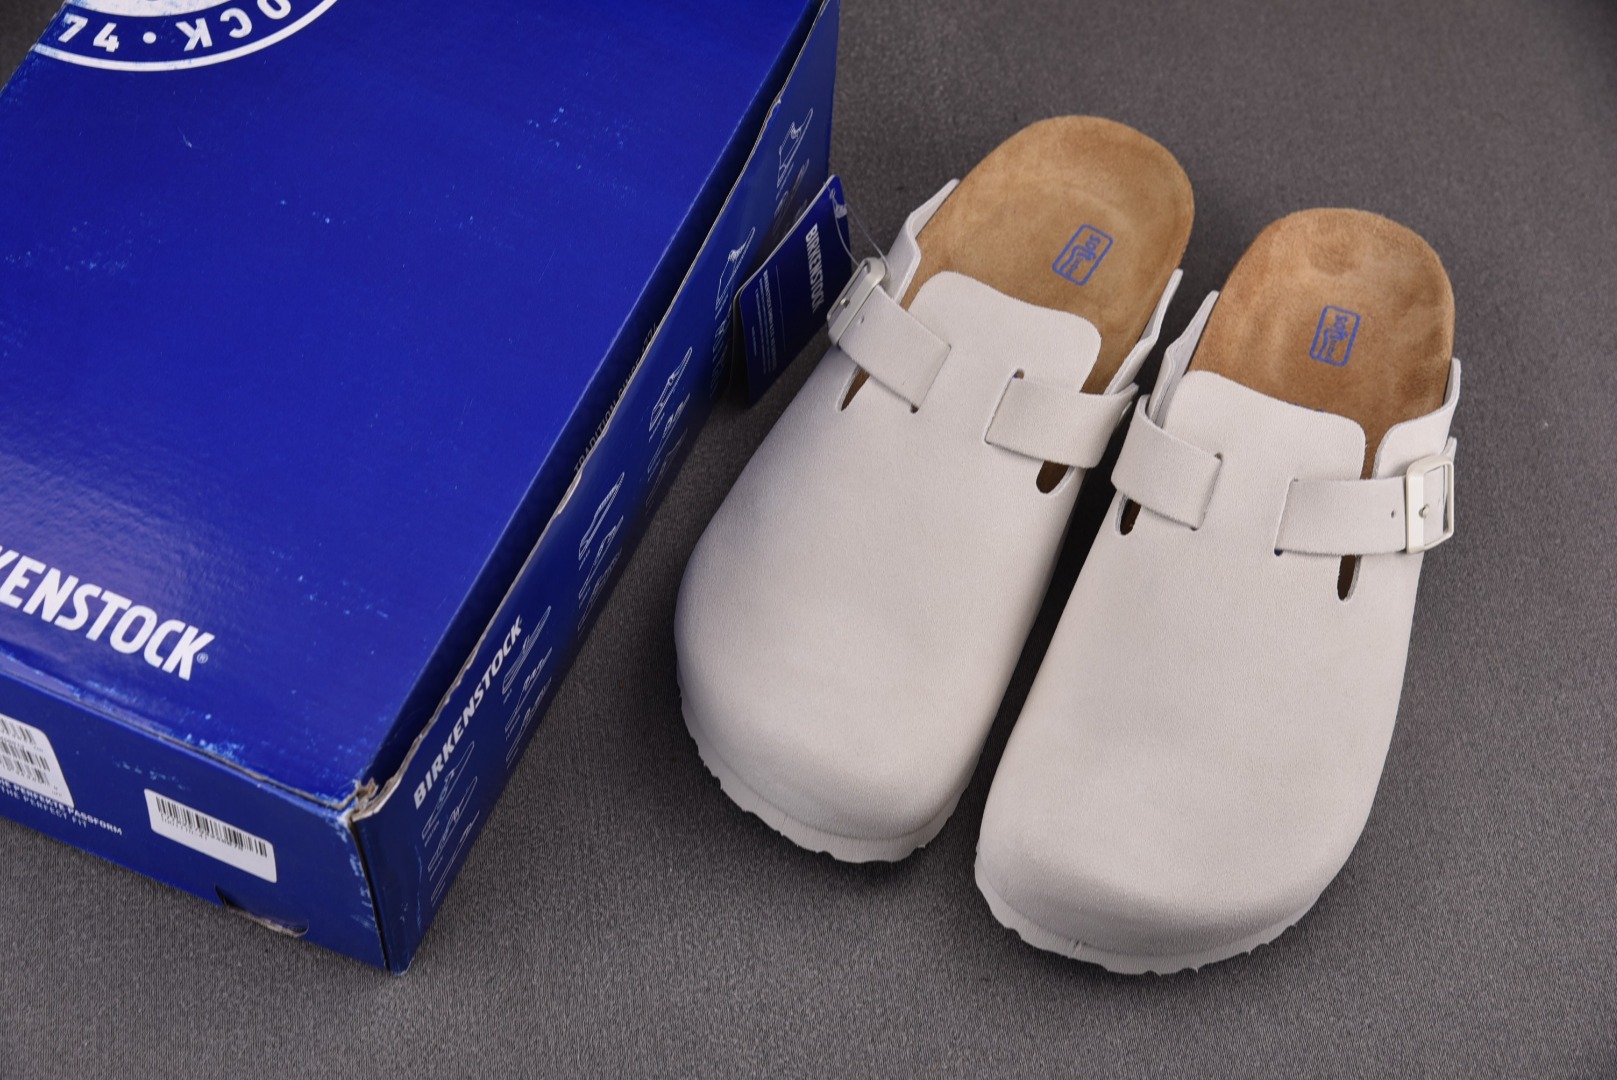 Birkenstock尺码35-45纯原出品-Brikenstock包头拖鞋白色YZ029